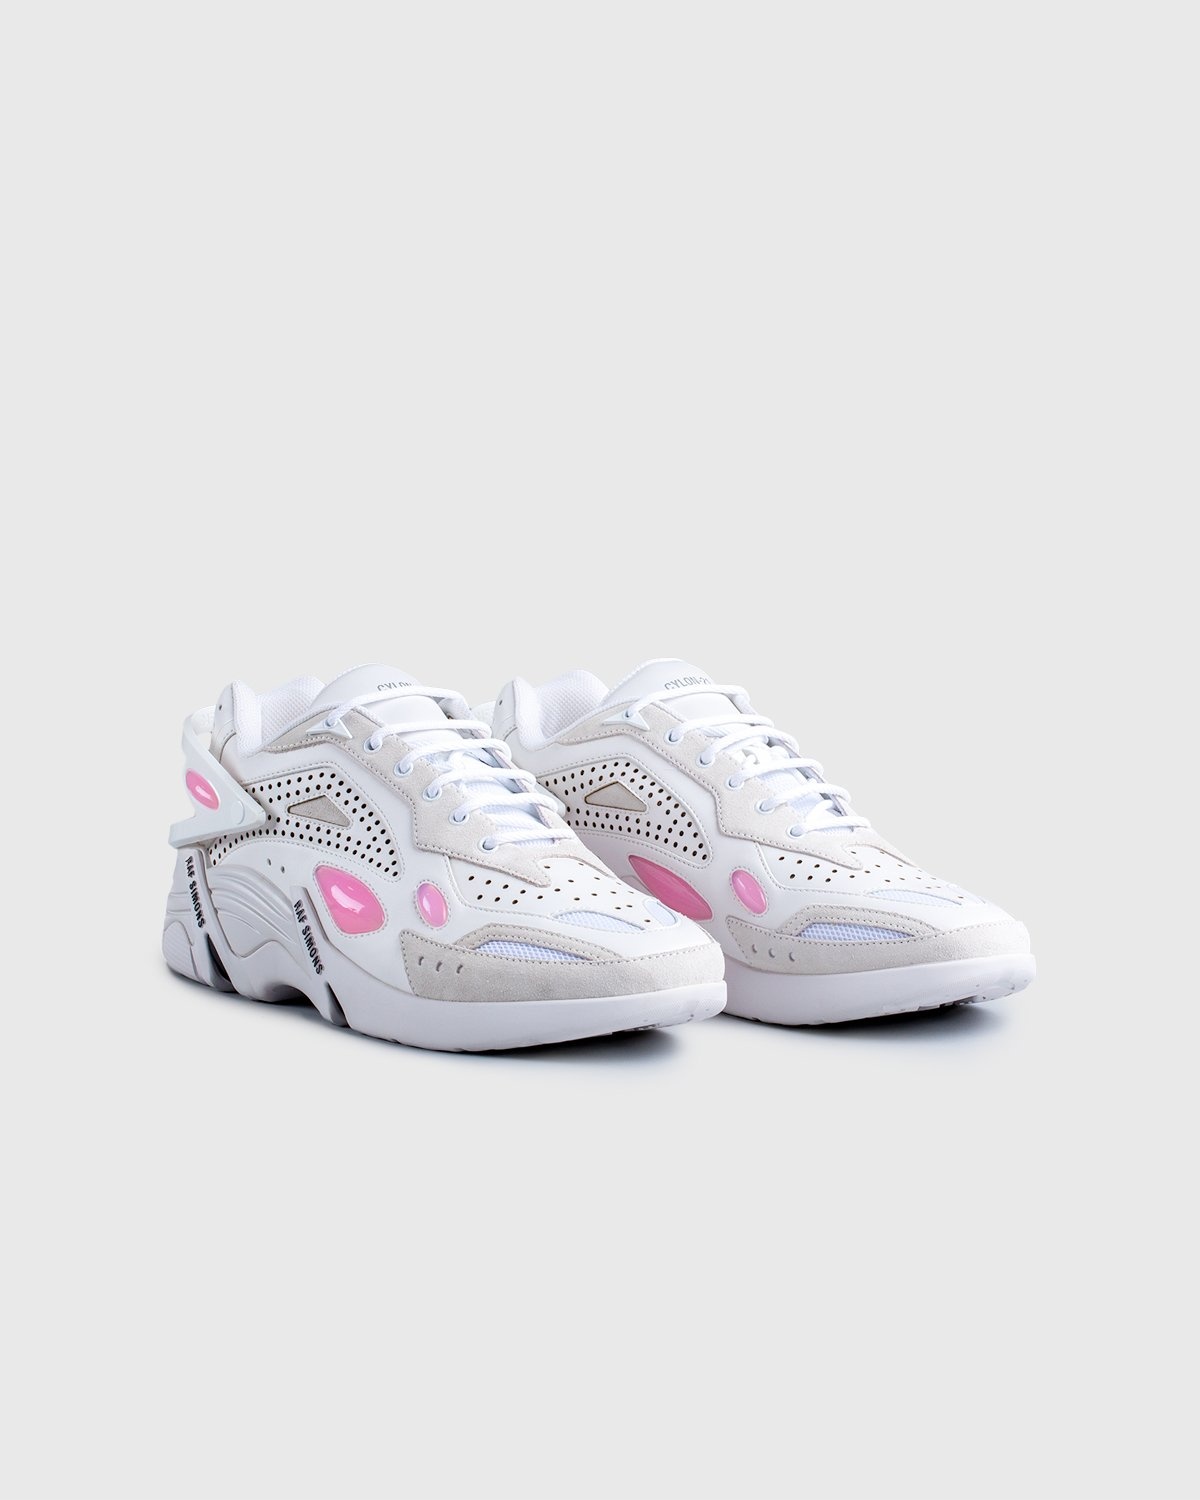 Raf Simons – Cylon White - Sneakers - White - Image 3